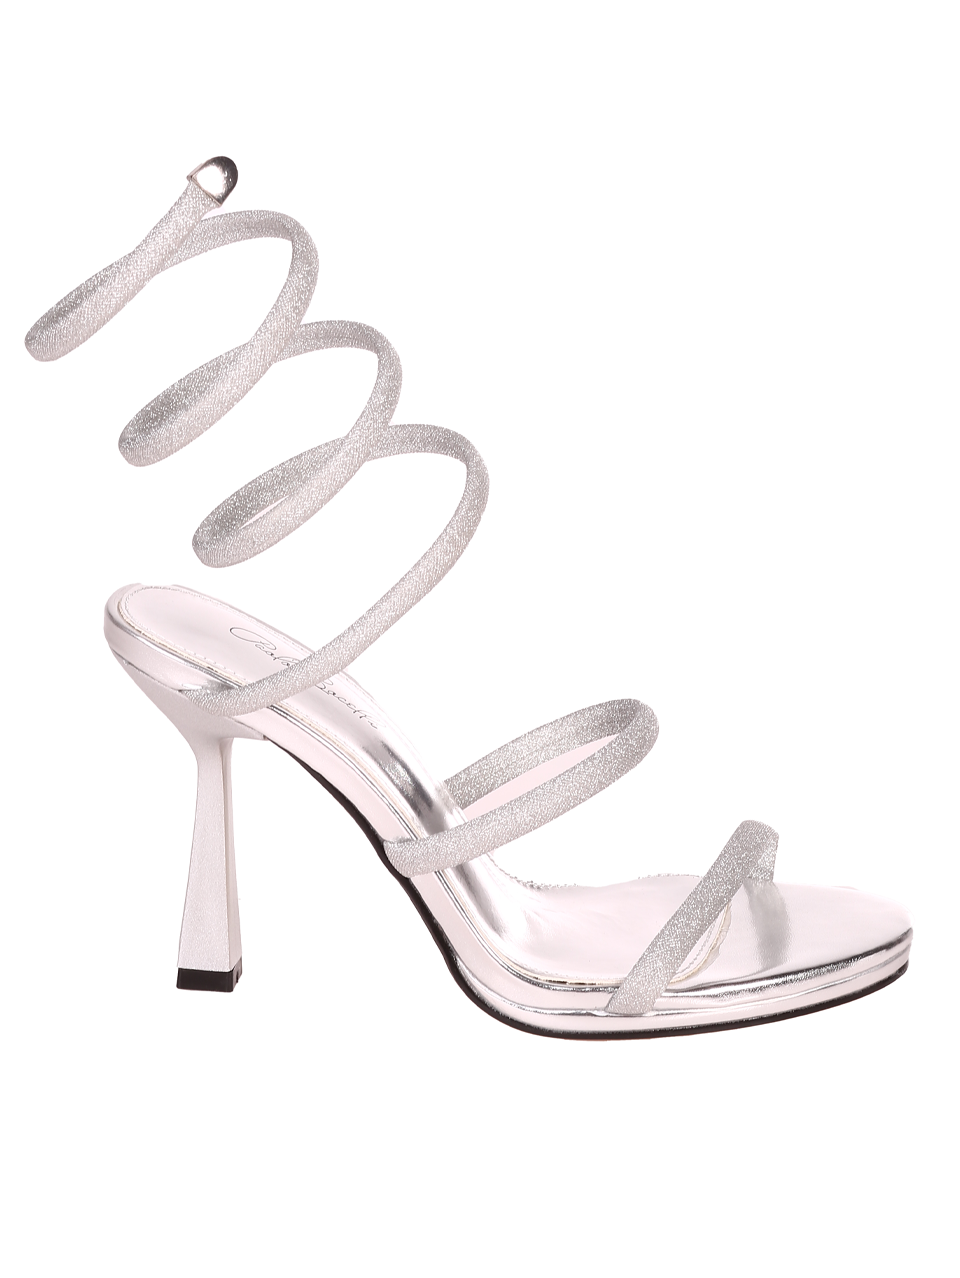 Елегантни дамски сандали в сребристо 4M-24025 silver